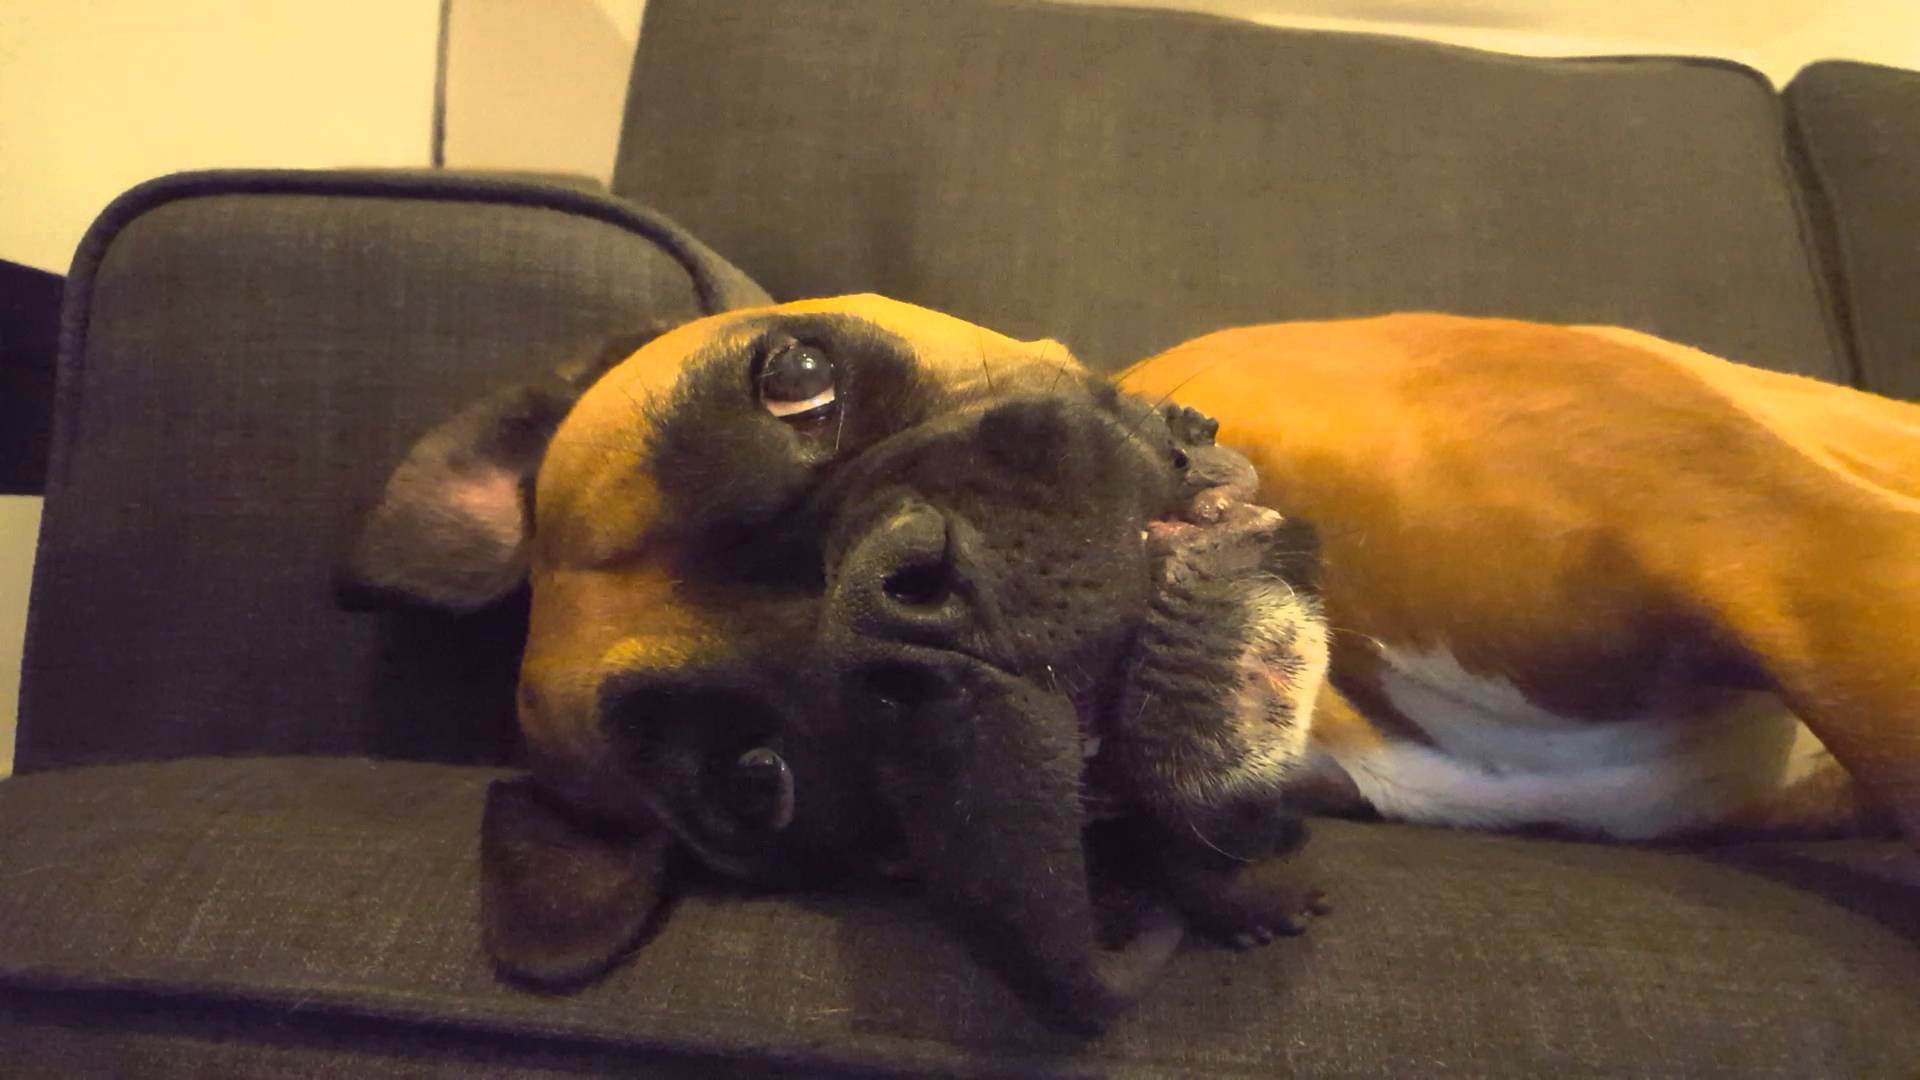 Boxer dog having a meltdown - YouTube